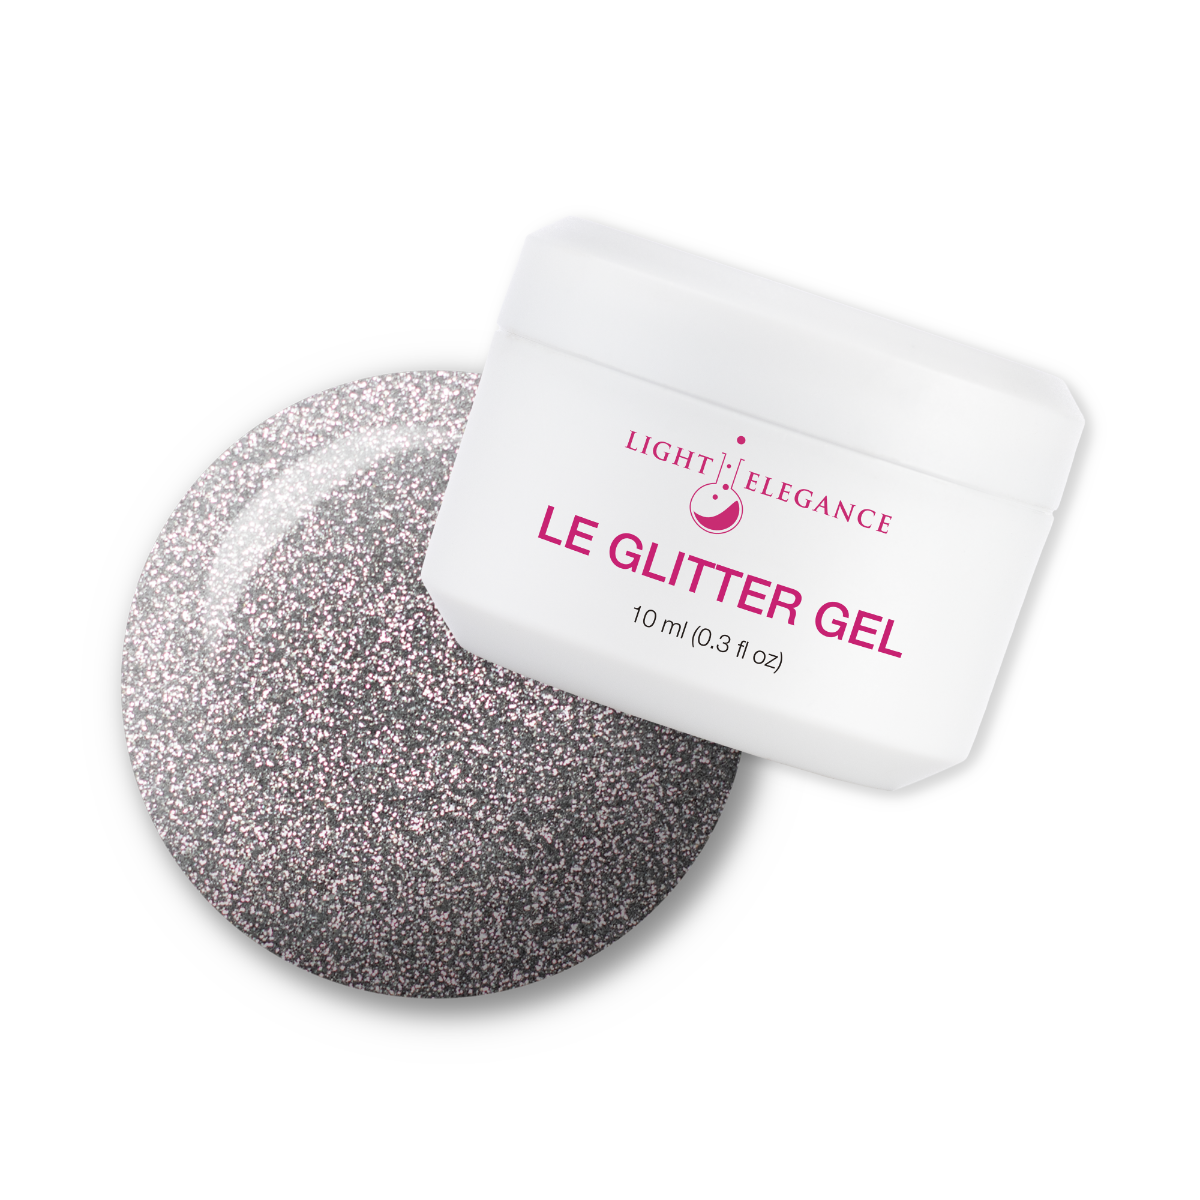 Light Elegance Glitter Gel - Silver Sparkle :: New Packaging